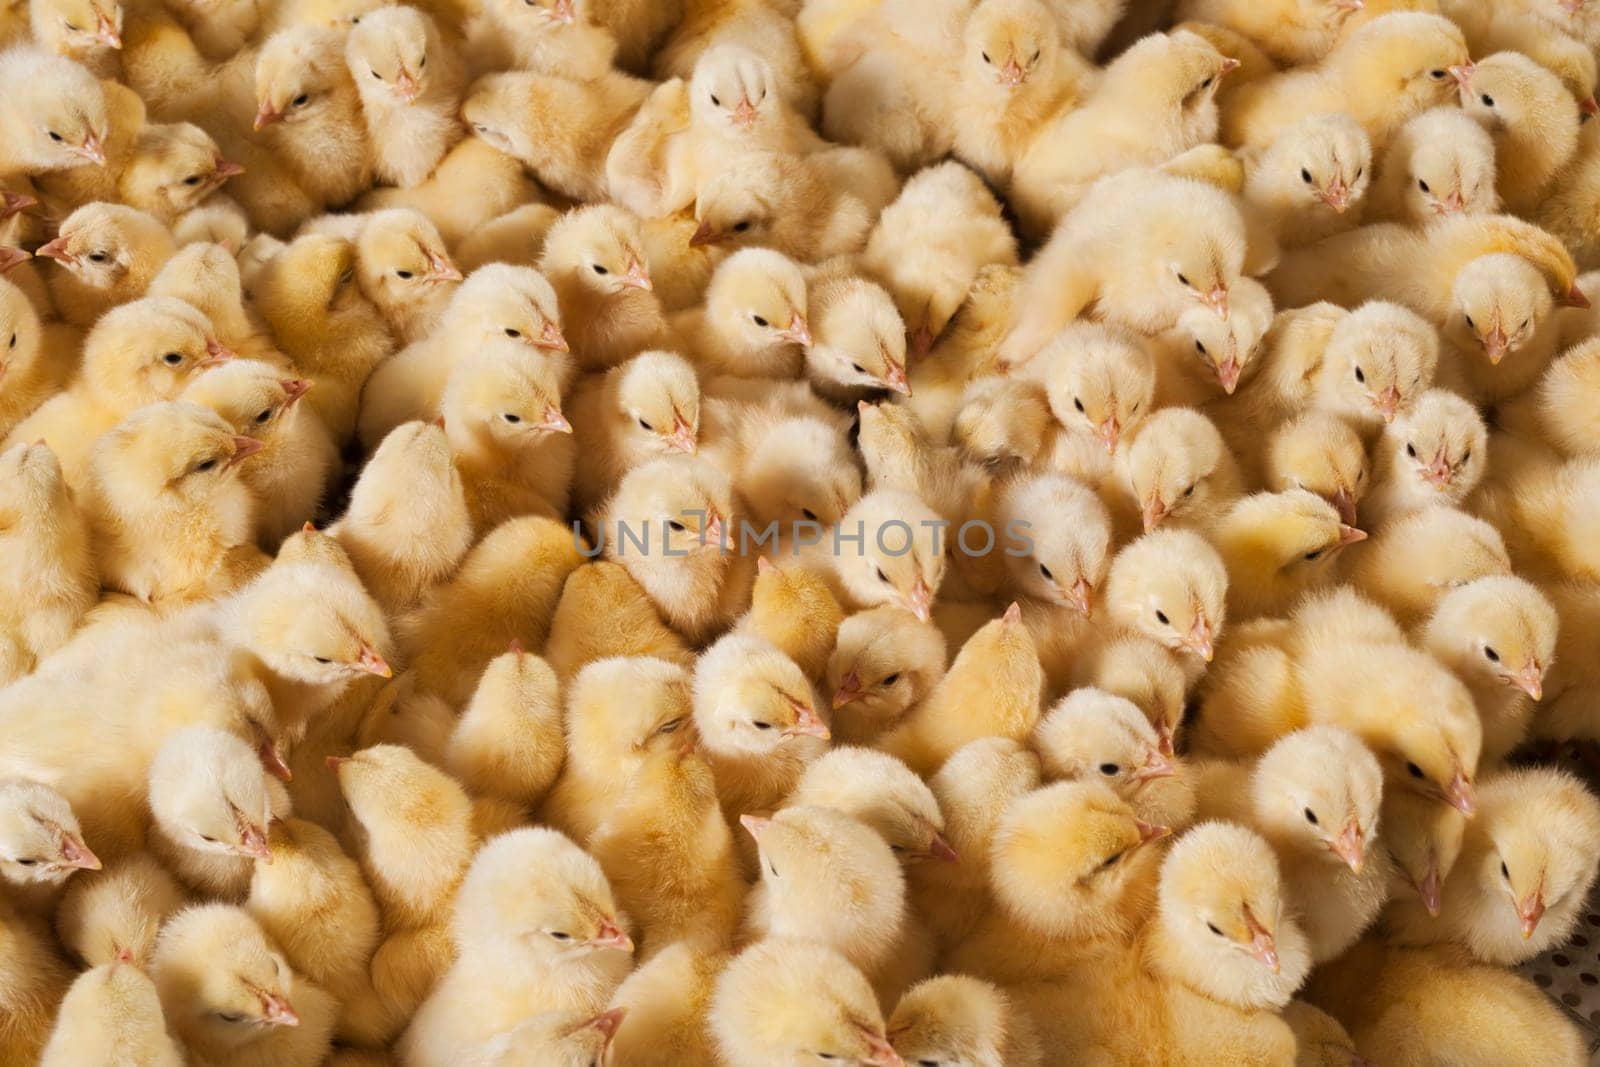 Photo hatched chicks closeup. High quality photo